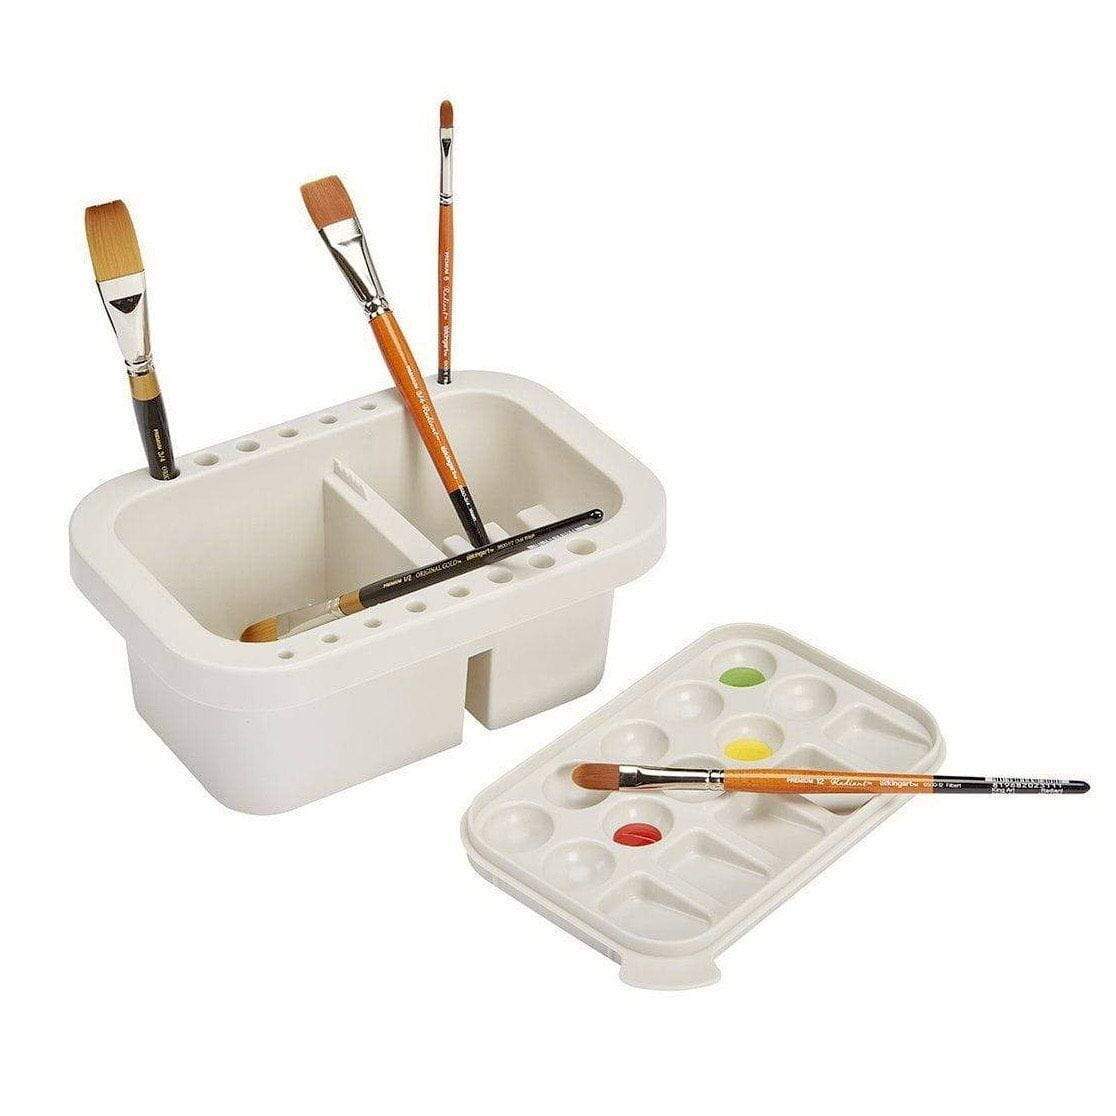  Box Painting Box Paintbrush Organizer Wooden Paint